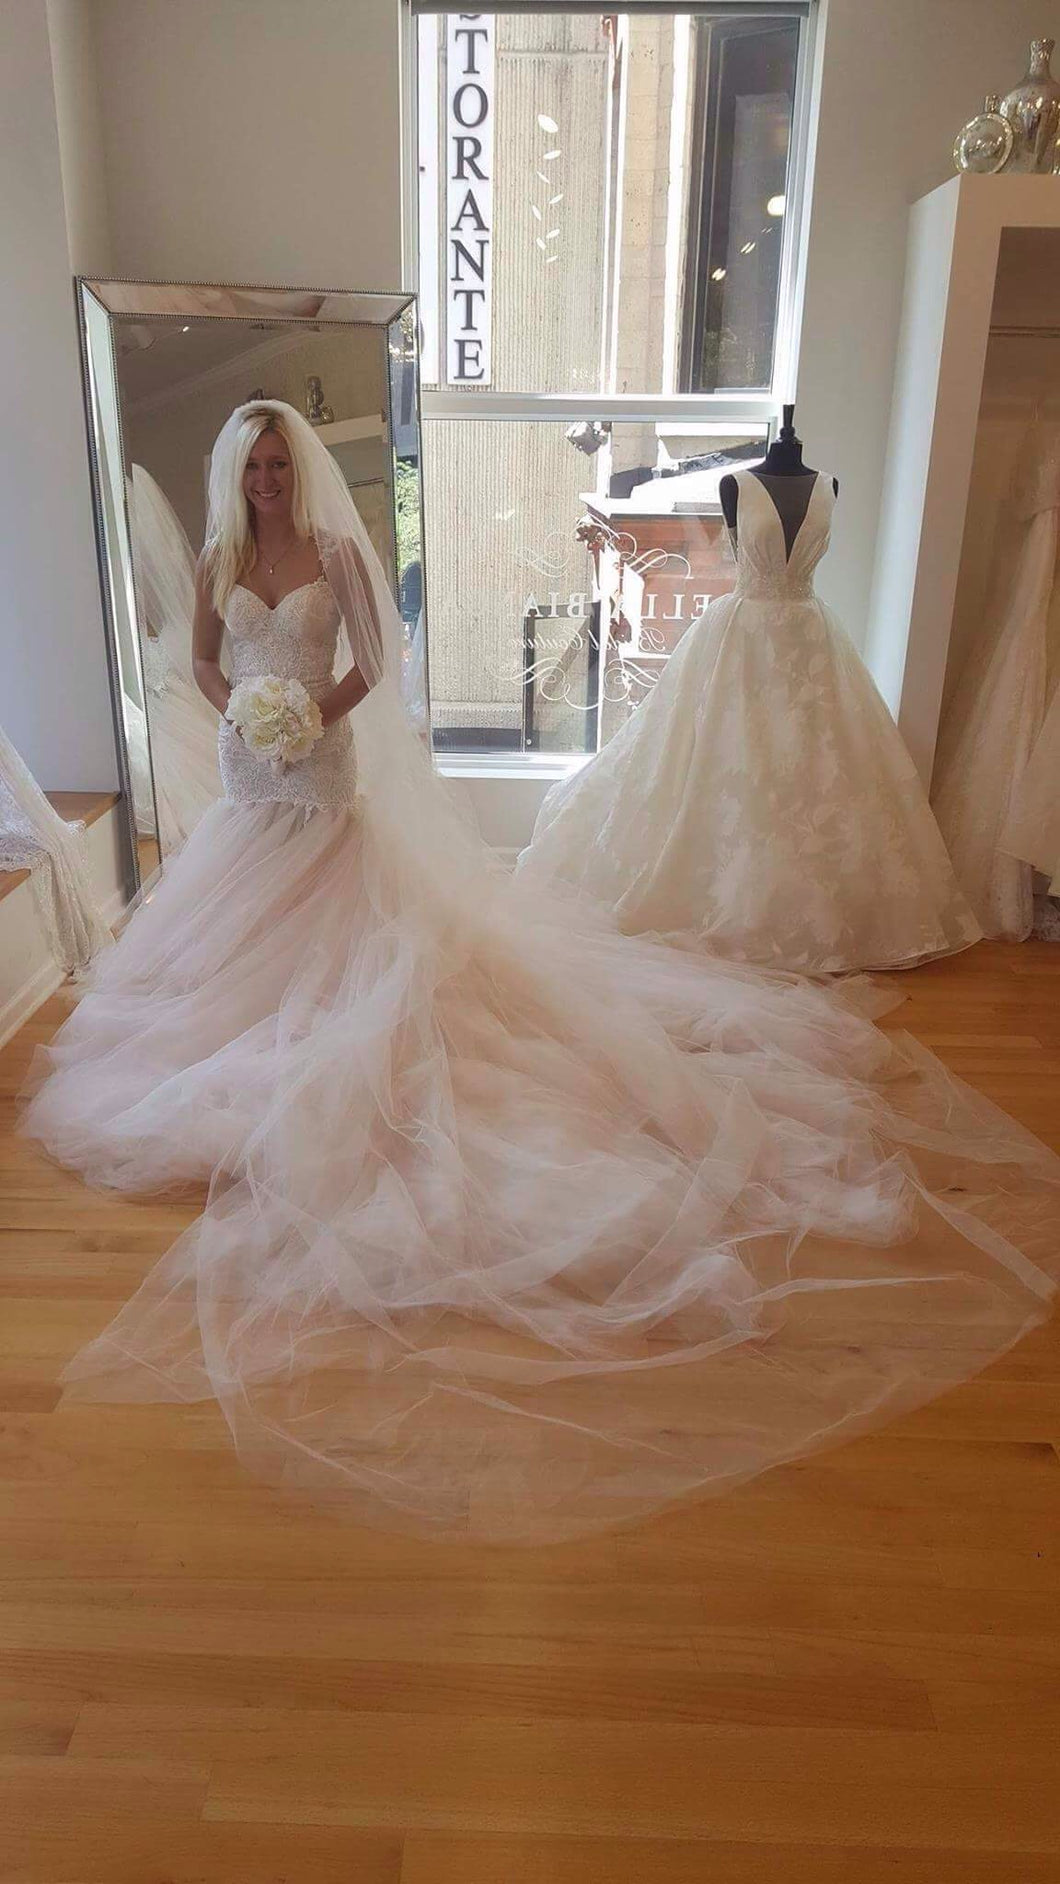 Galia Lahav 'Loretta' size 4 new wedding dress front view on bride